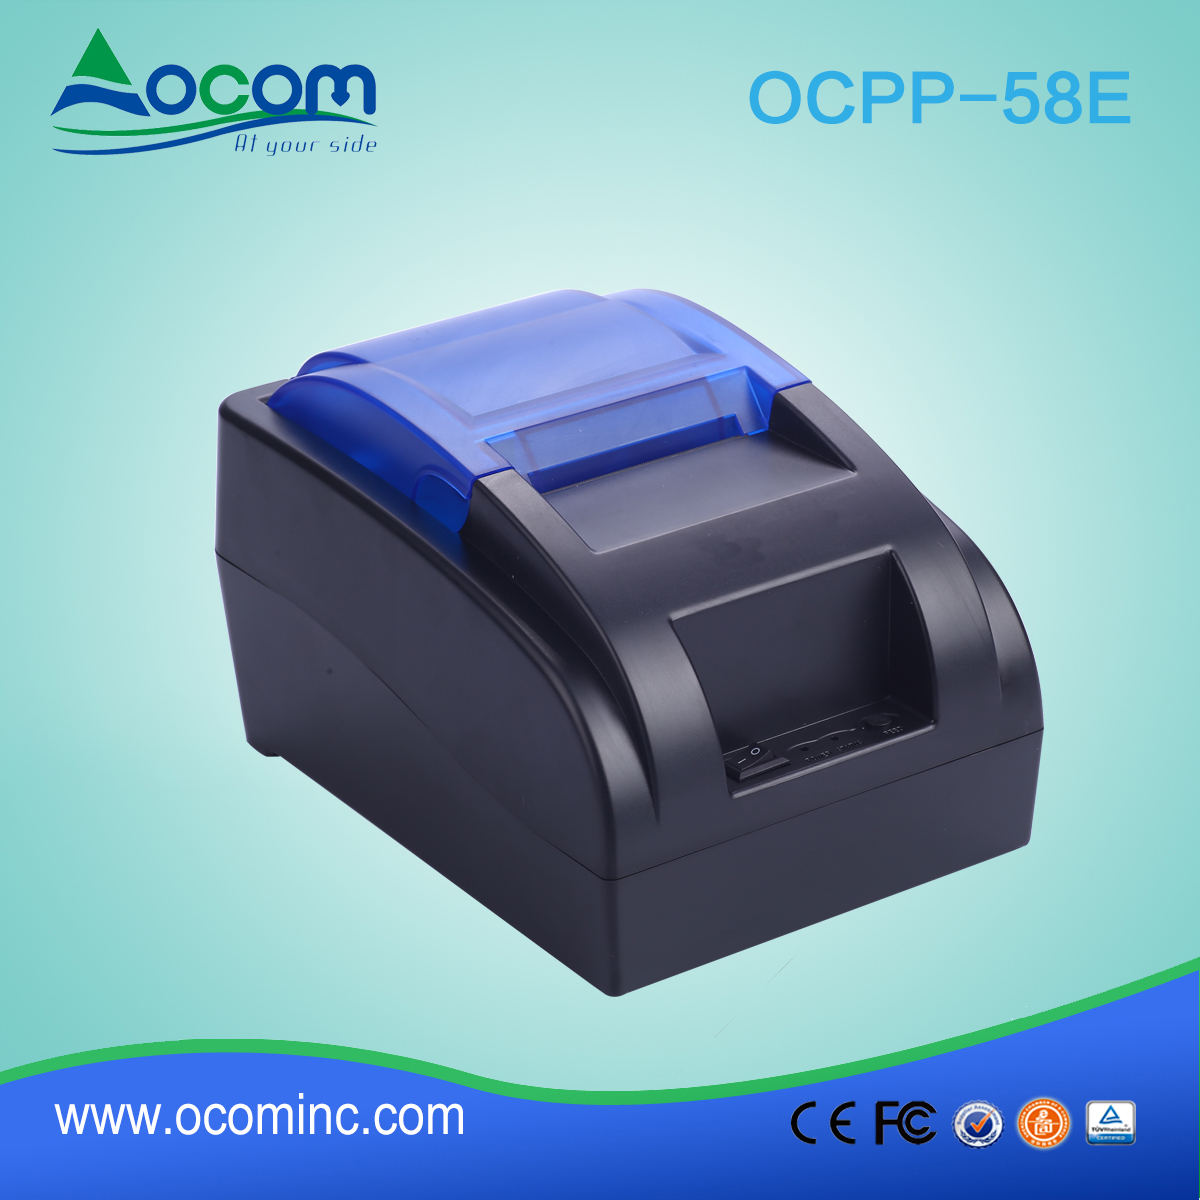 OCPP-58E-中国制造的低成本58毫米热敏打印机